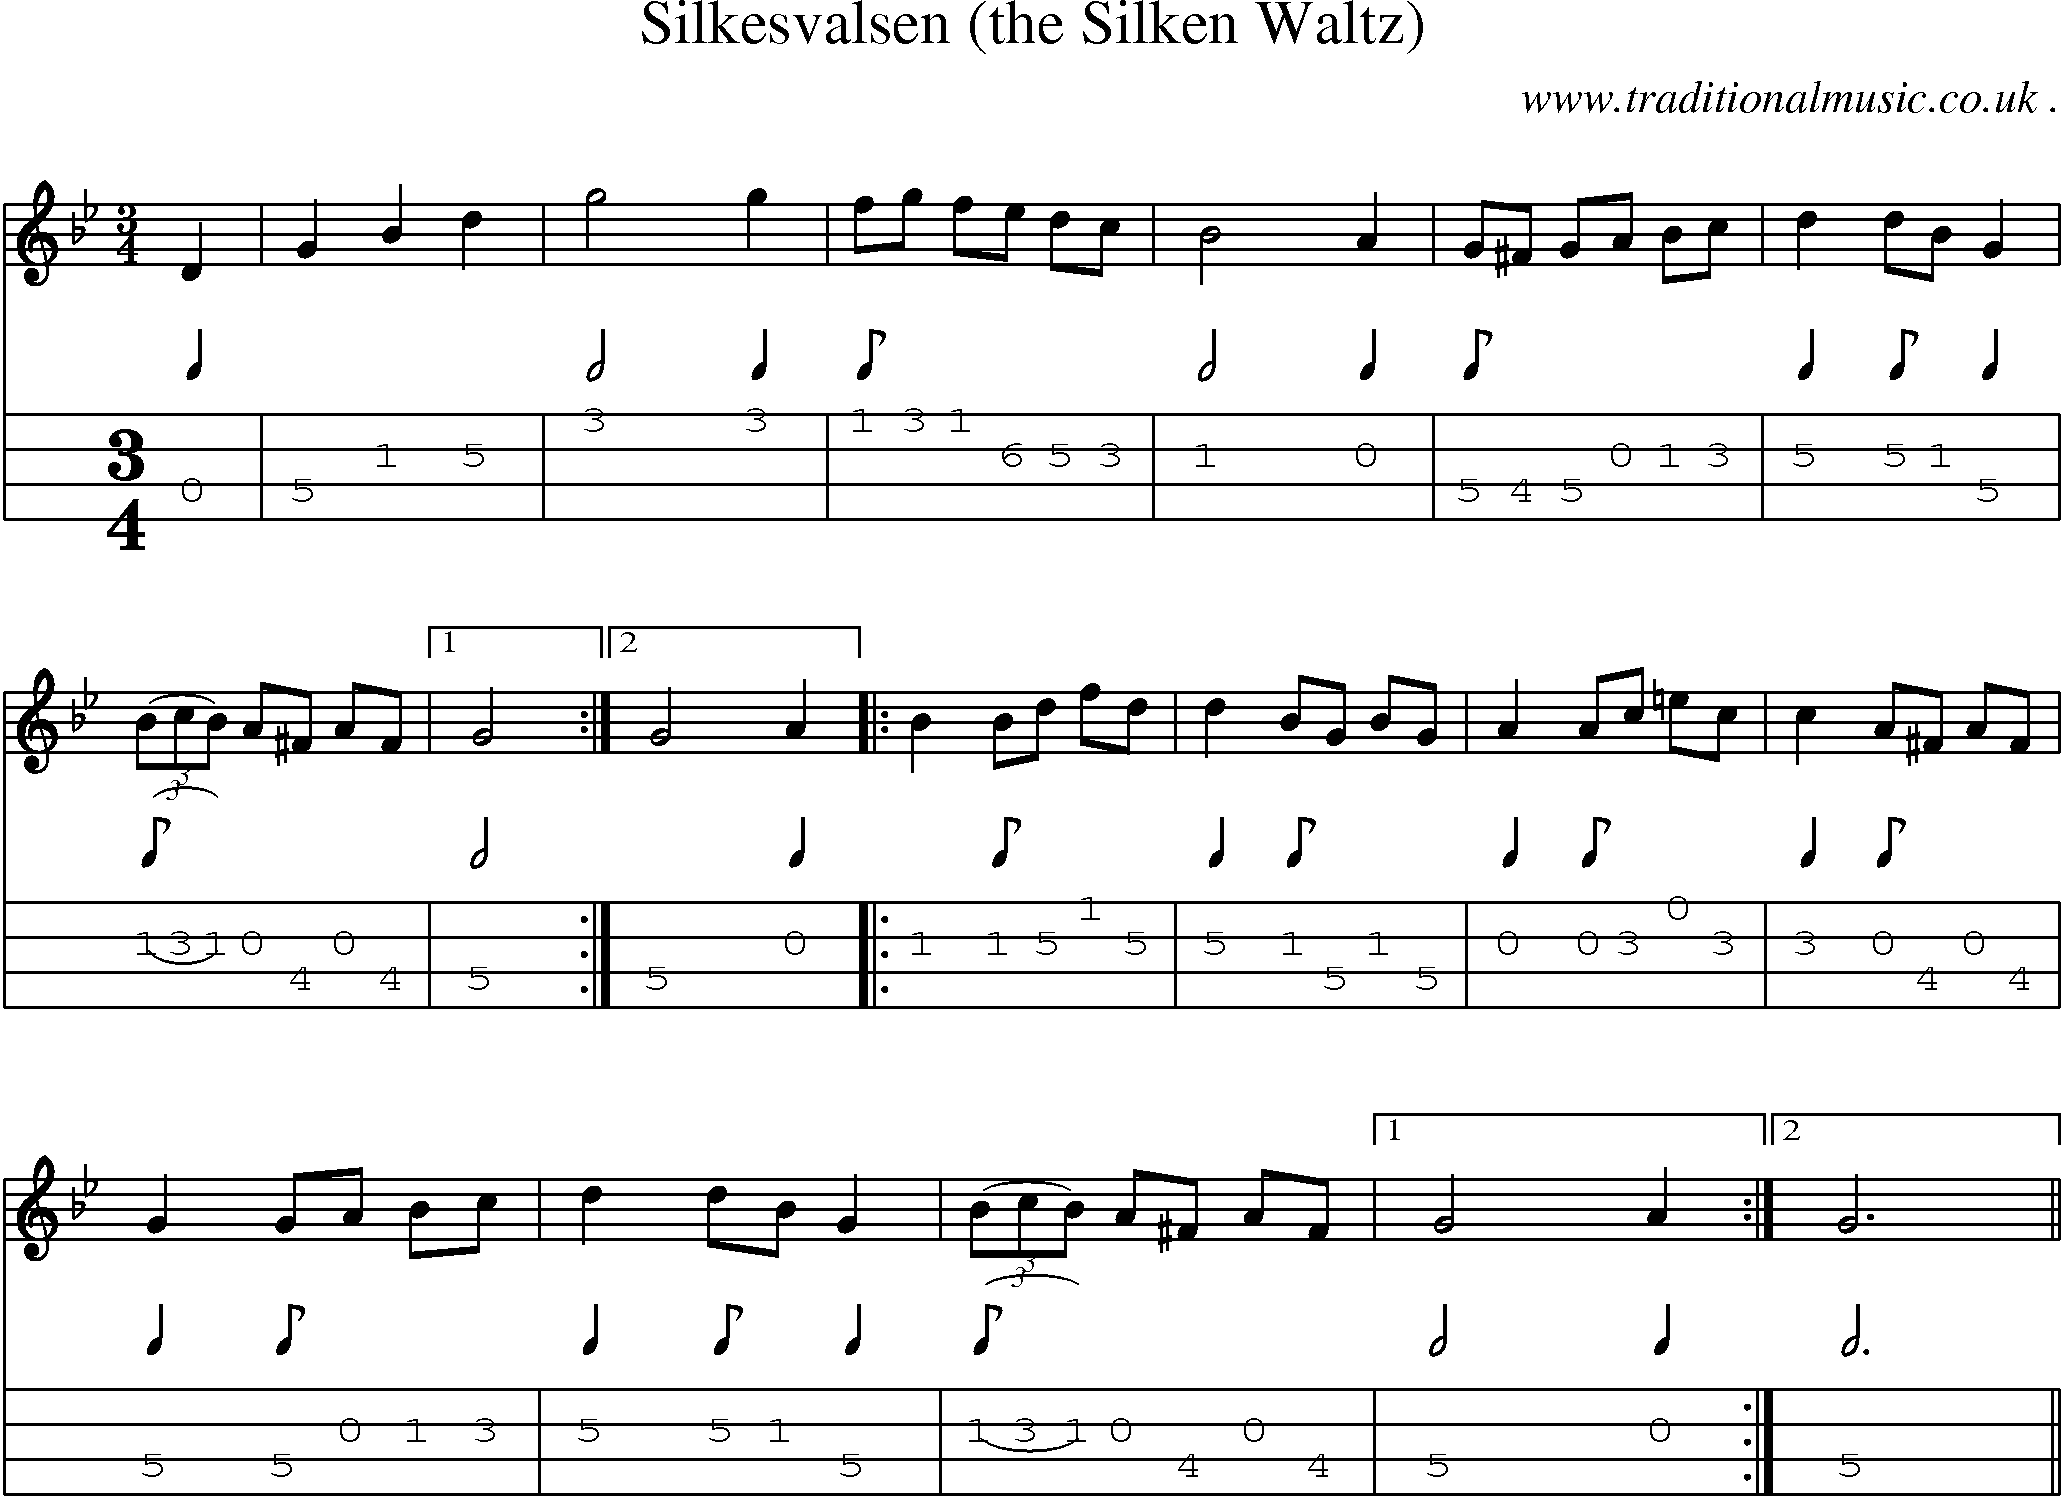 Sheet-Music and Mandolin Tabs for Silkesvalsen (the Silken Waltz)